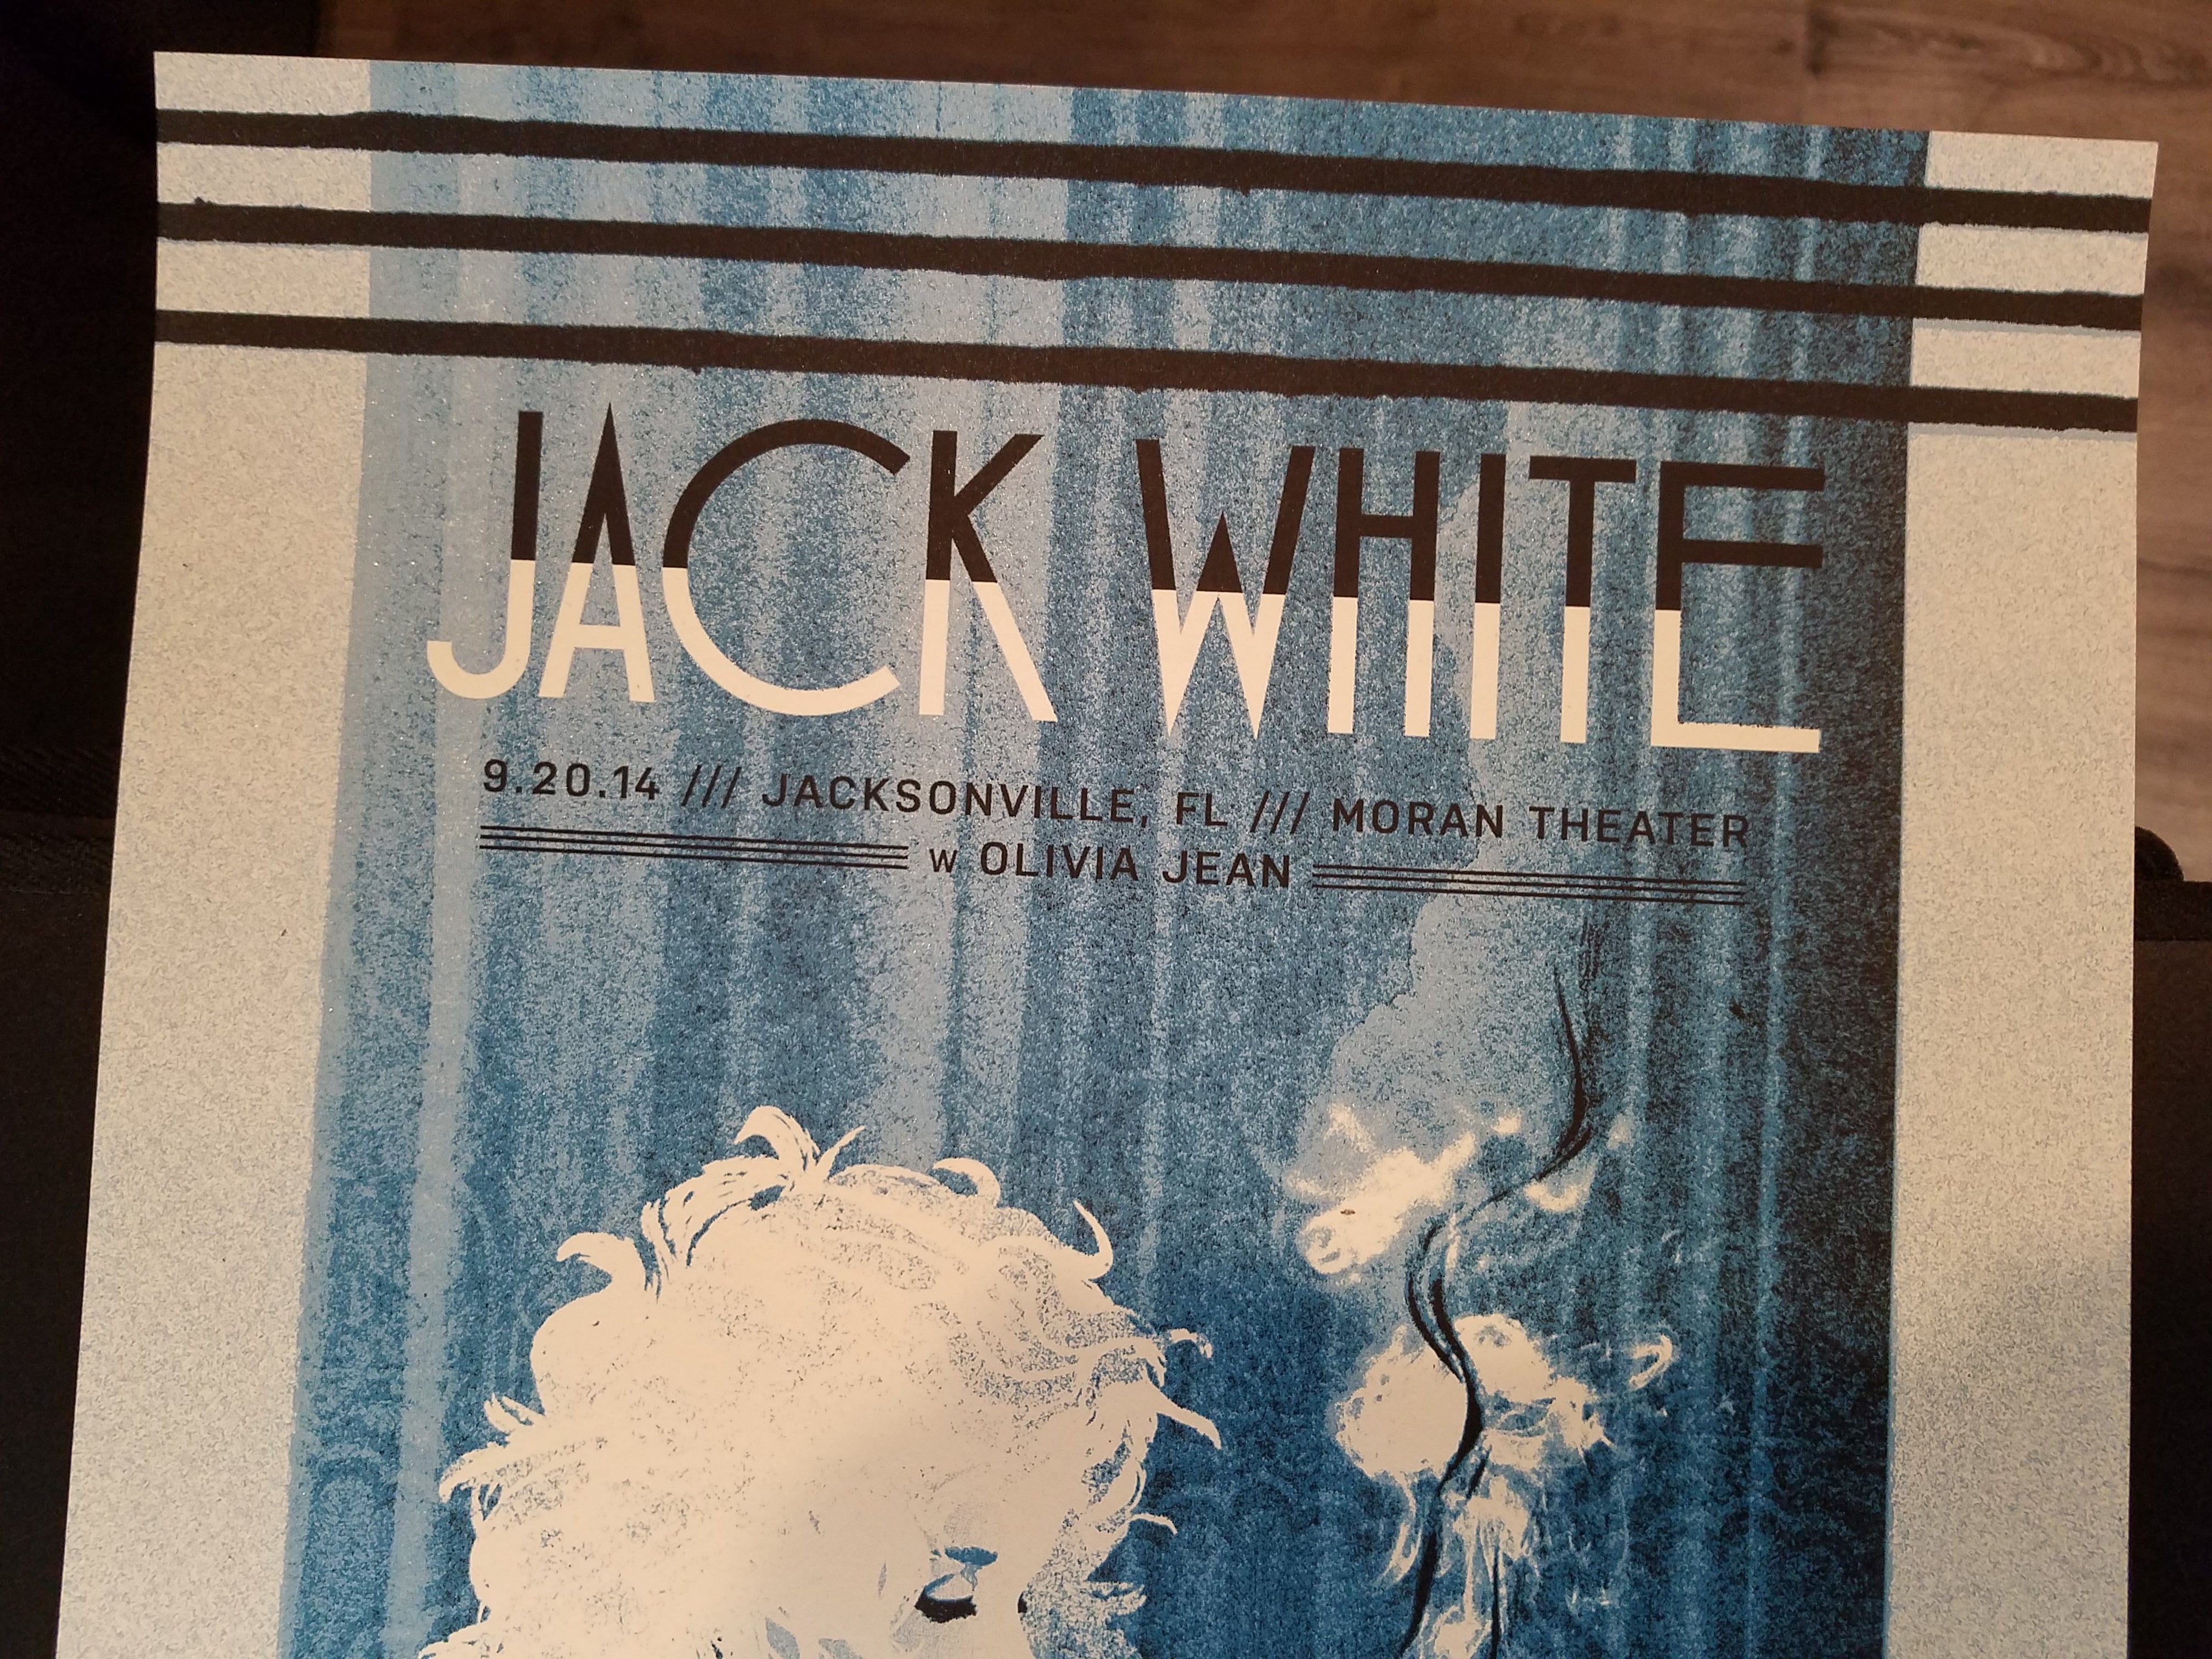 Jack White Morgan Theatre, Jacksonville, FL Sep 20 2014 The Silent Giants